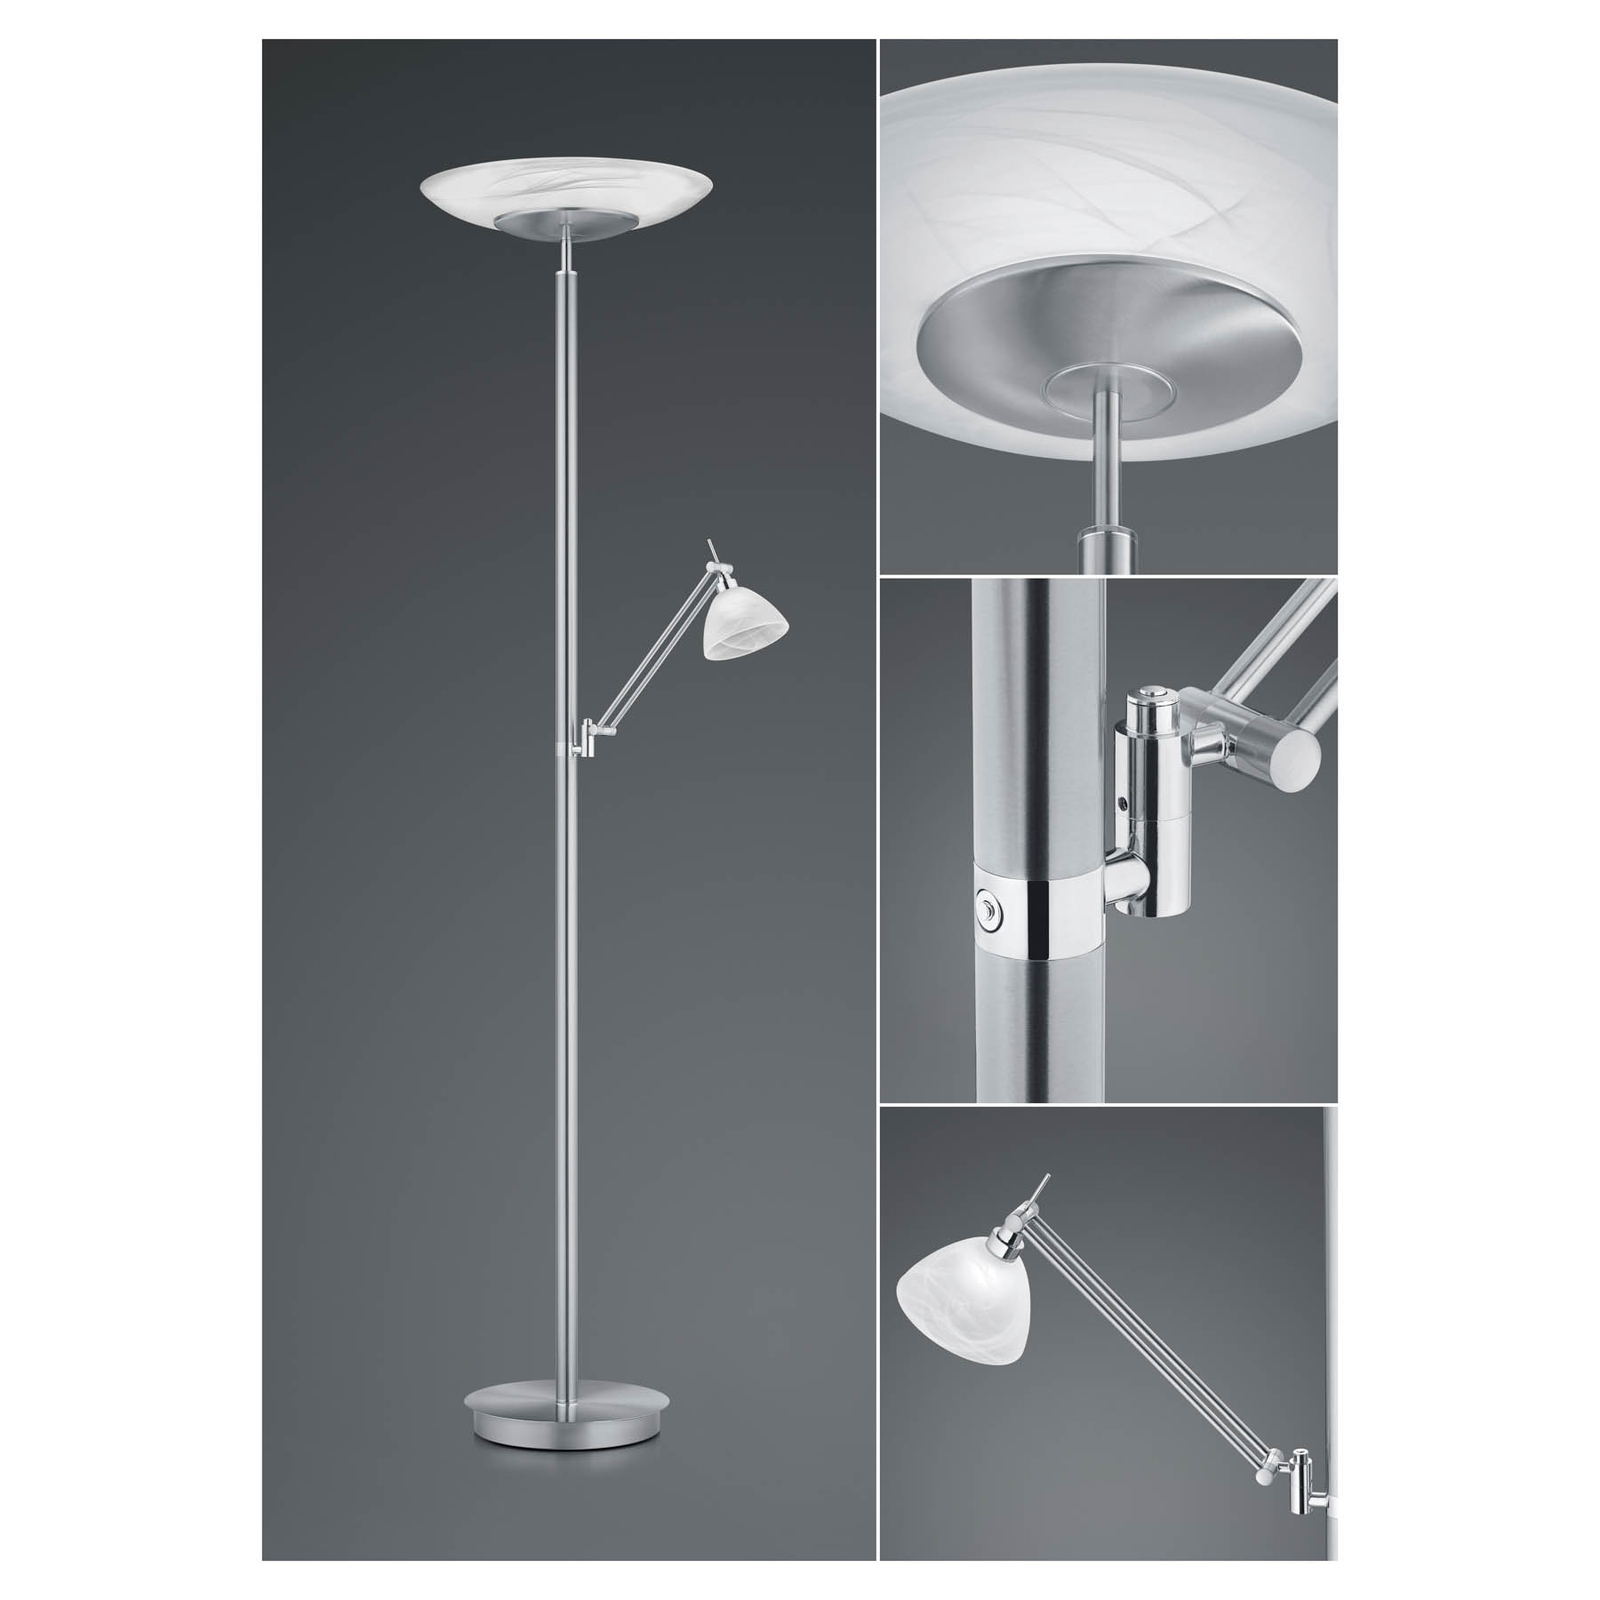 Findus LED floor lamp, 2-bulb, nickel